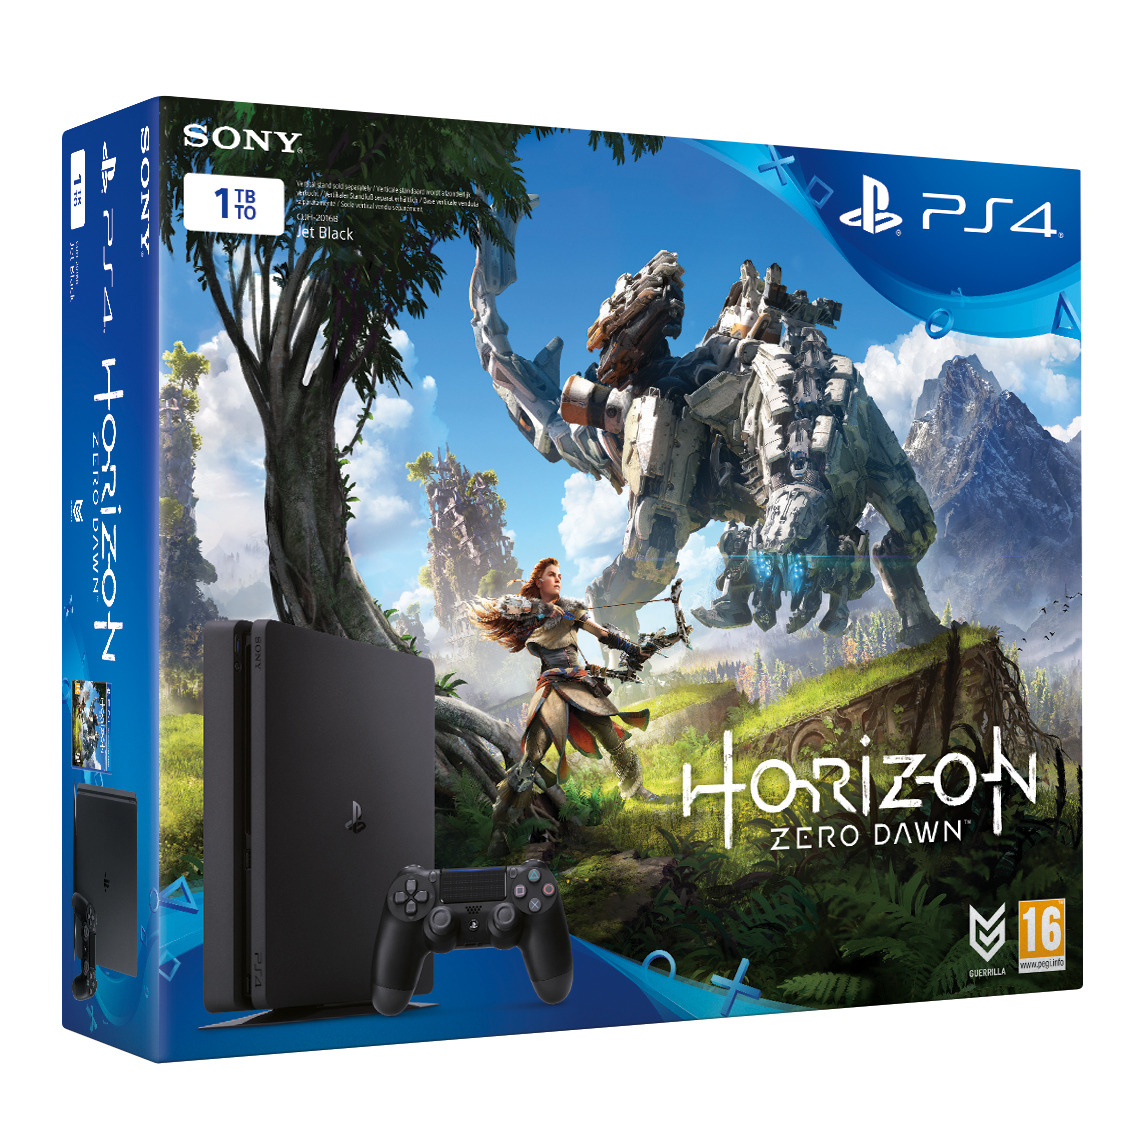 Horizon: Zero Dawn 1 TB Bundle Announced For Europe - GameSpot